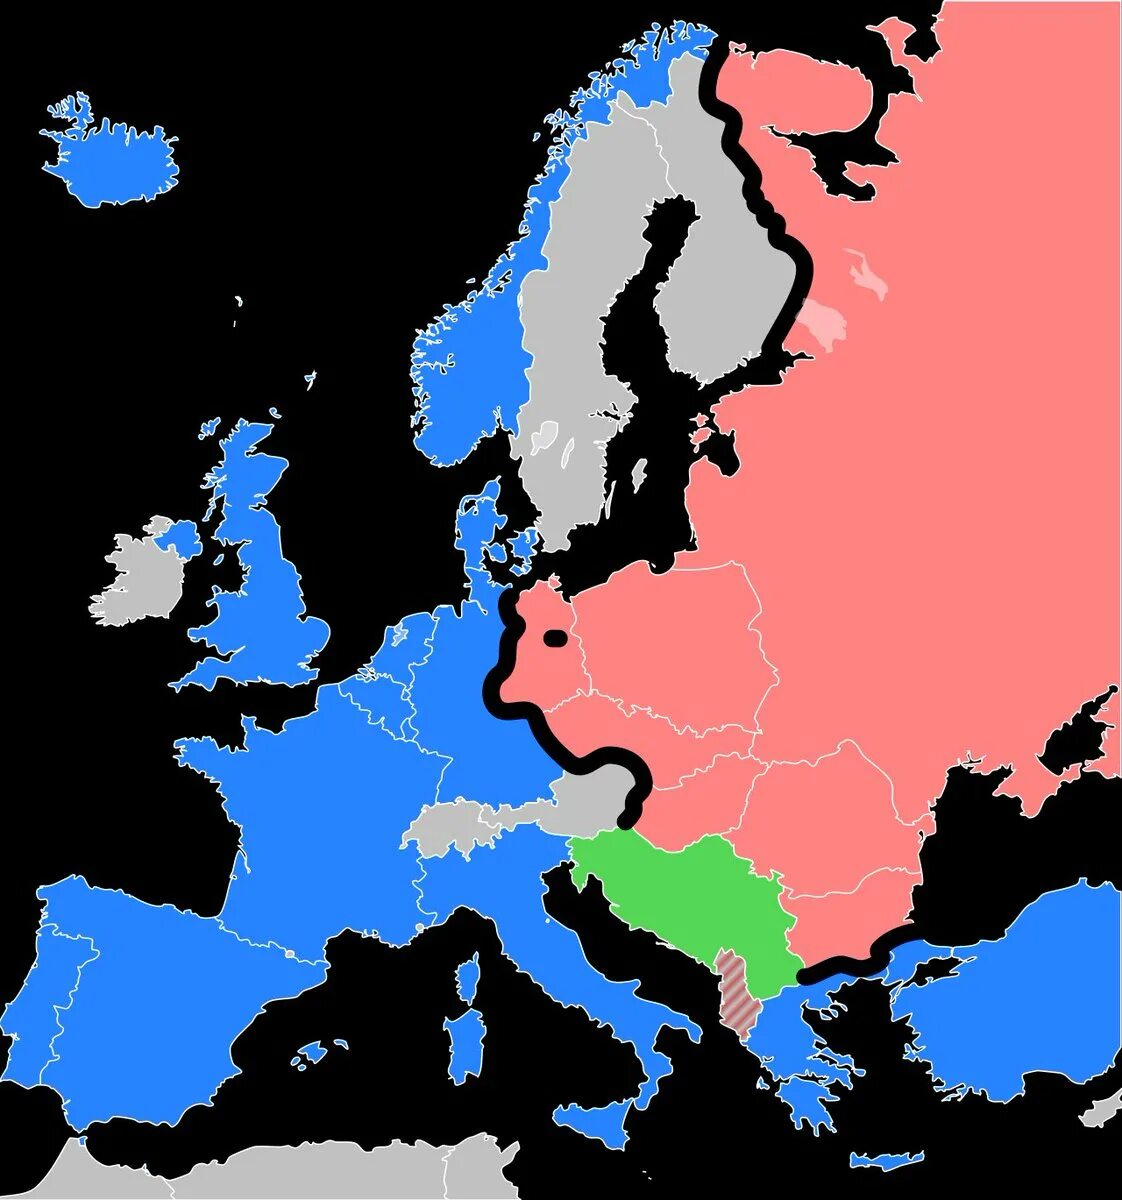 Европа железный занавес. Железный занавес на карте Европы. Границы железного занавеса. Железный занавес в Европе.